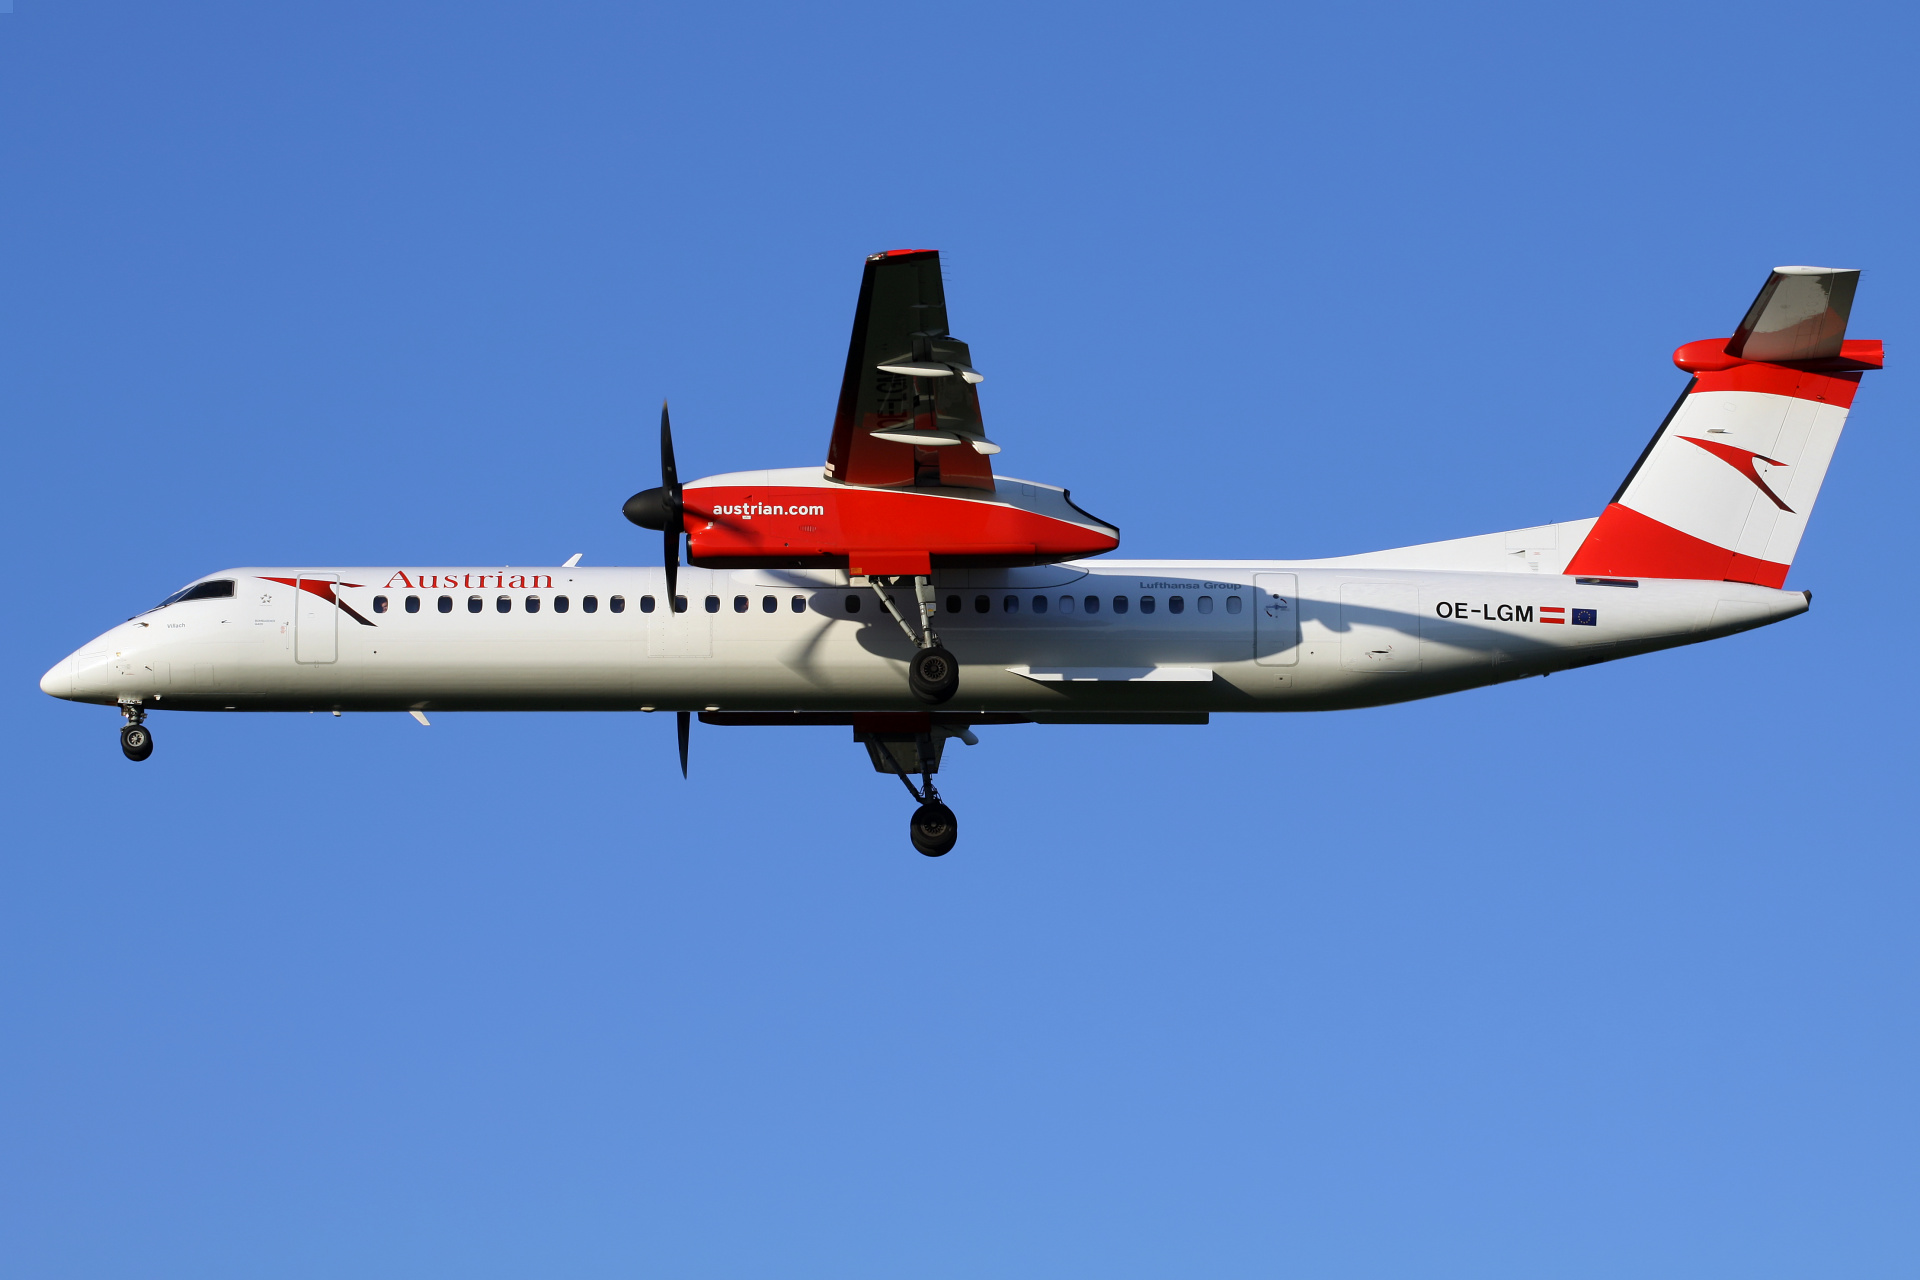 OE-LGM (Aircraft » EPWA Spotting » De Havilland Canada DHC-8 Dash 8 » Austrian Airlines)